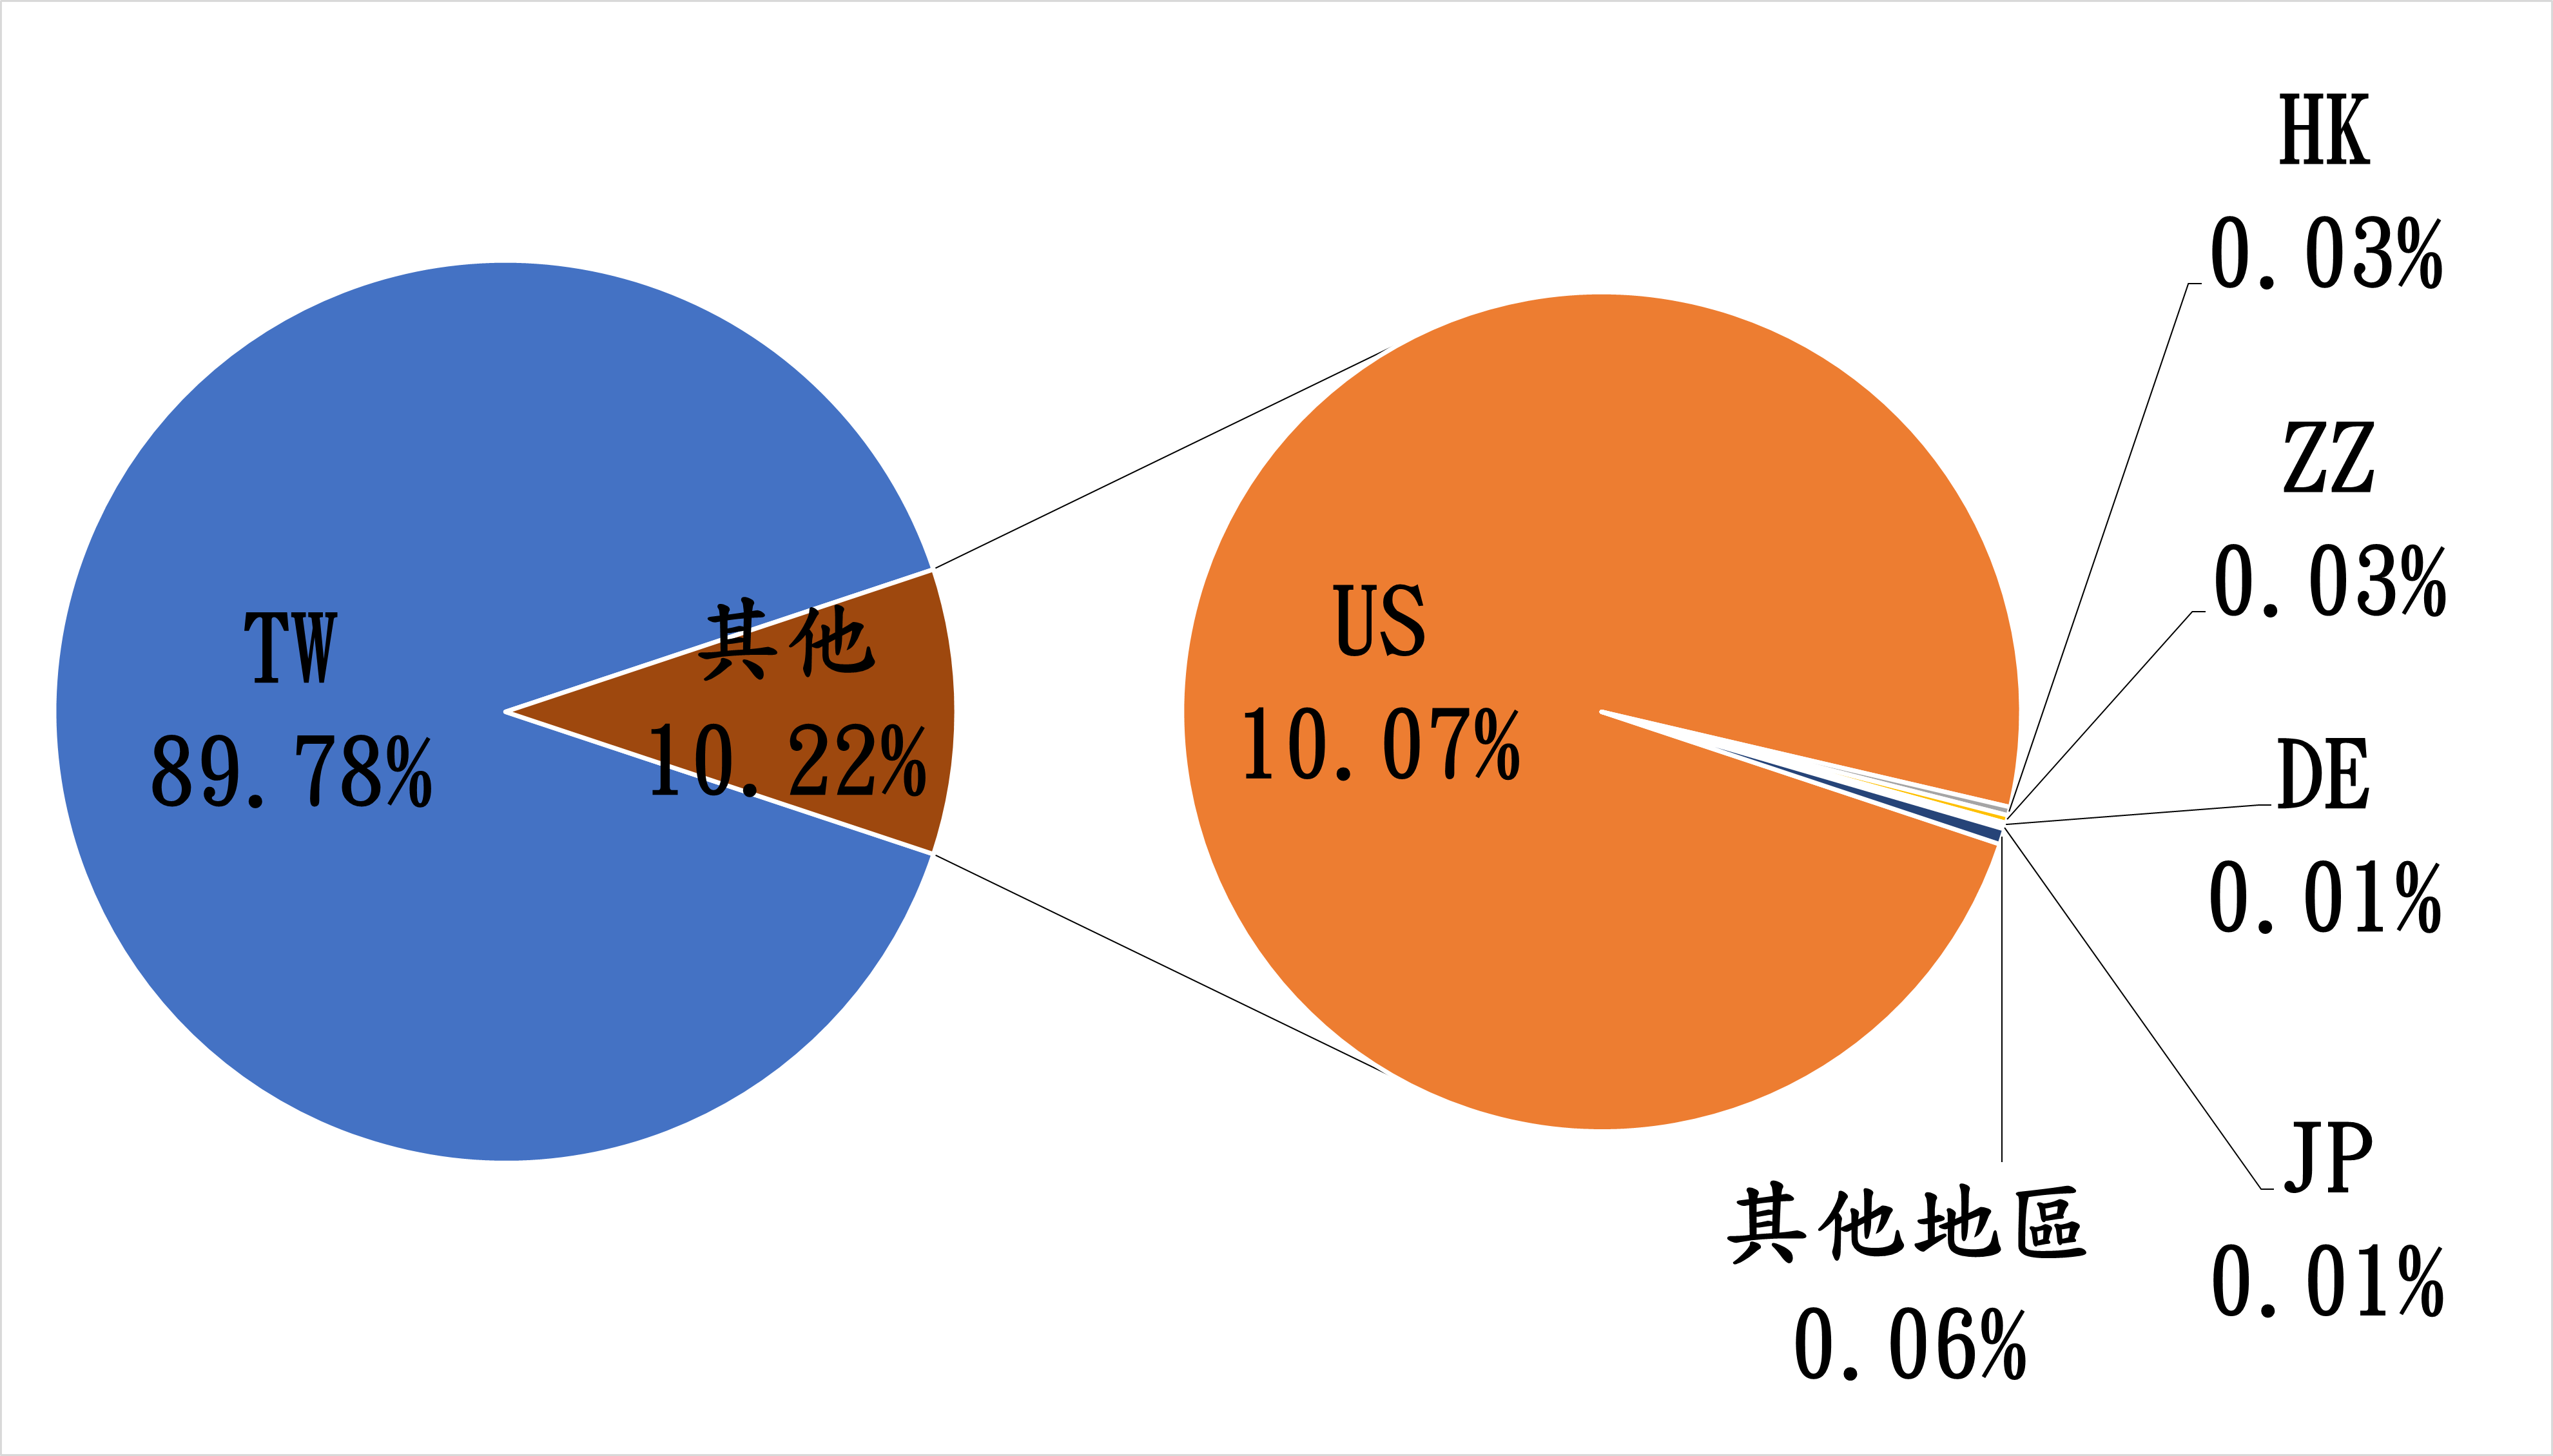 TW89.78% 其他10.22% US10.07% HK0.03% ZZ0.03% DE0.01% JP0.01% 其他地區0.06%